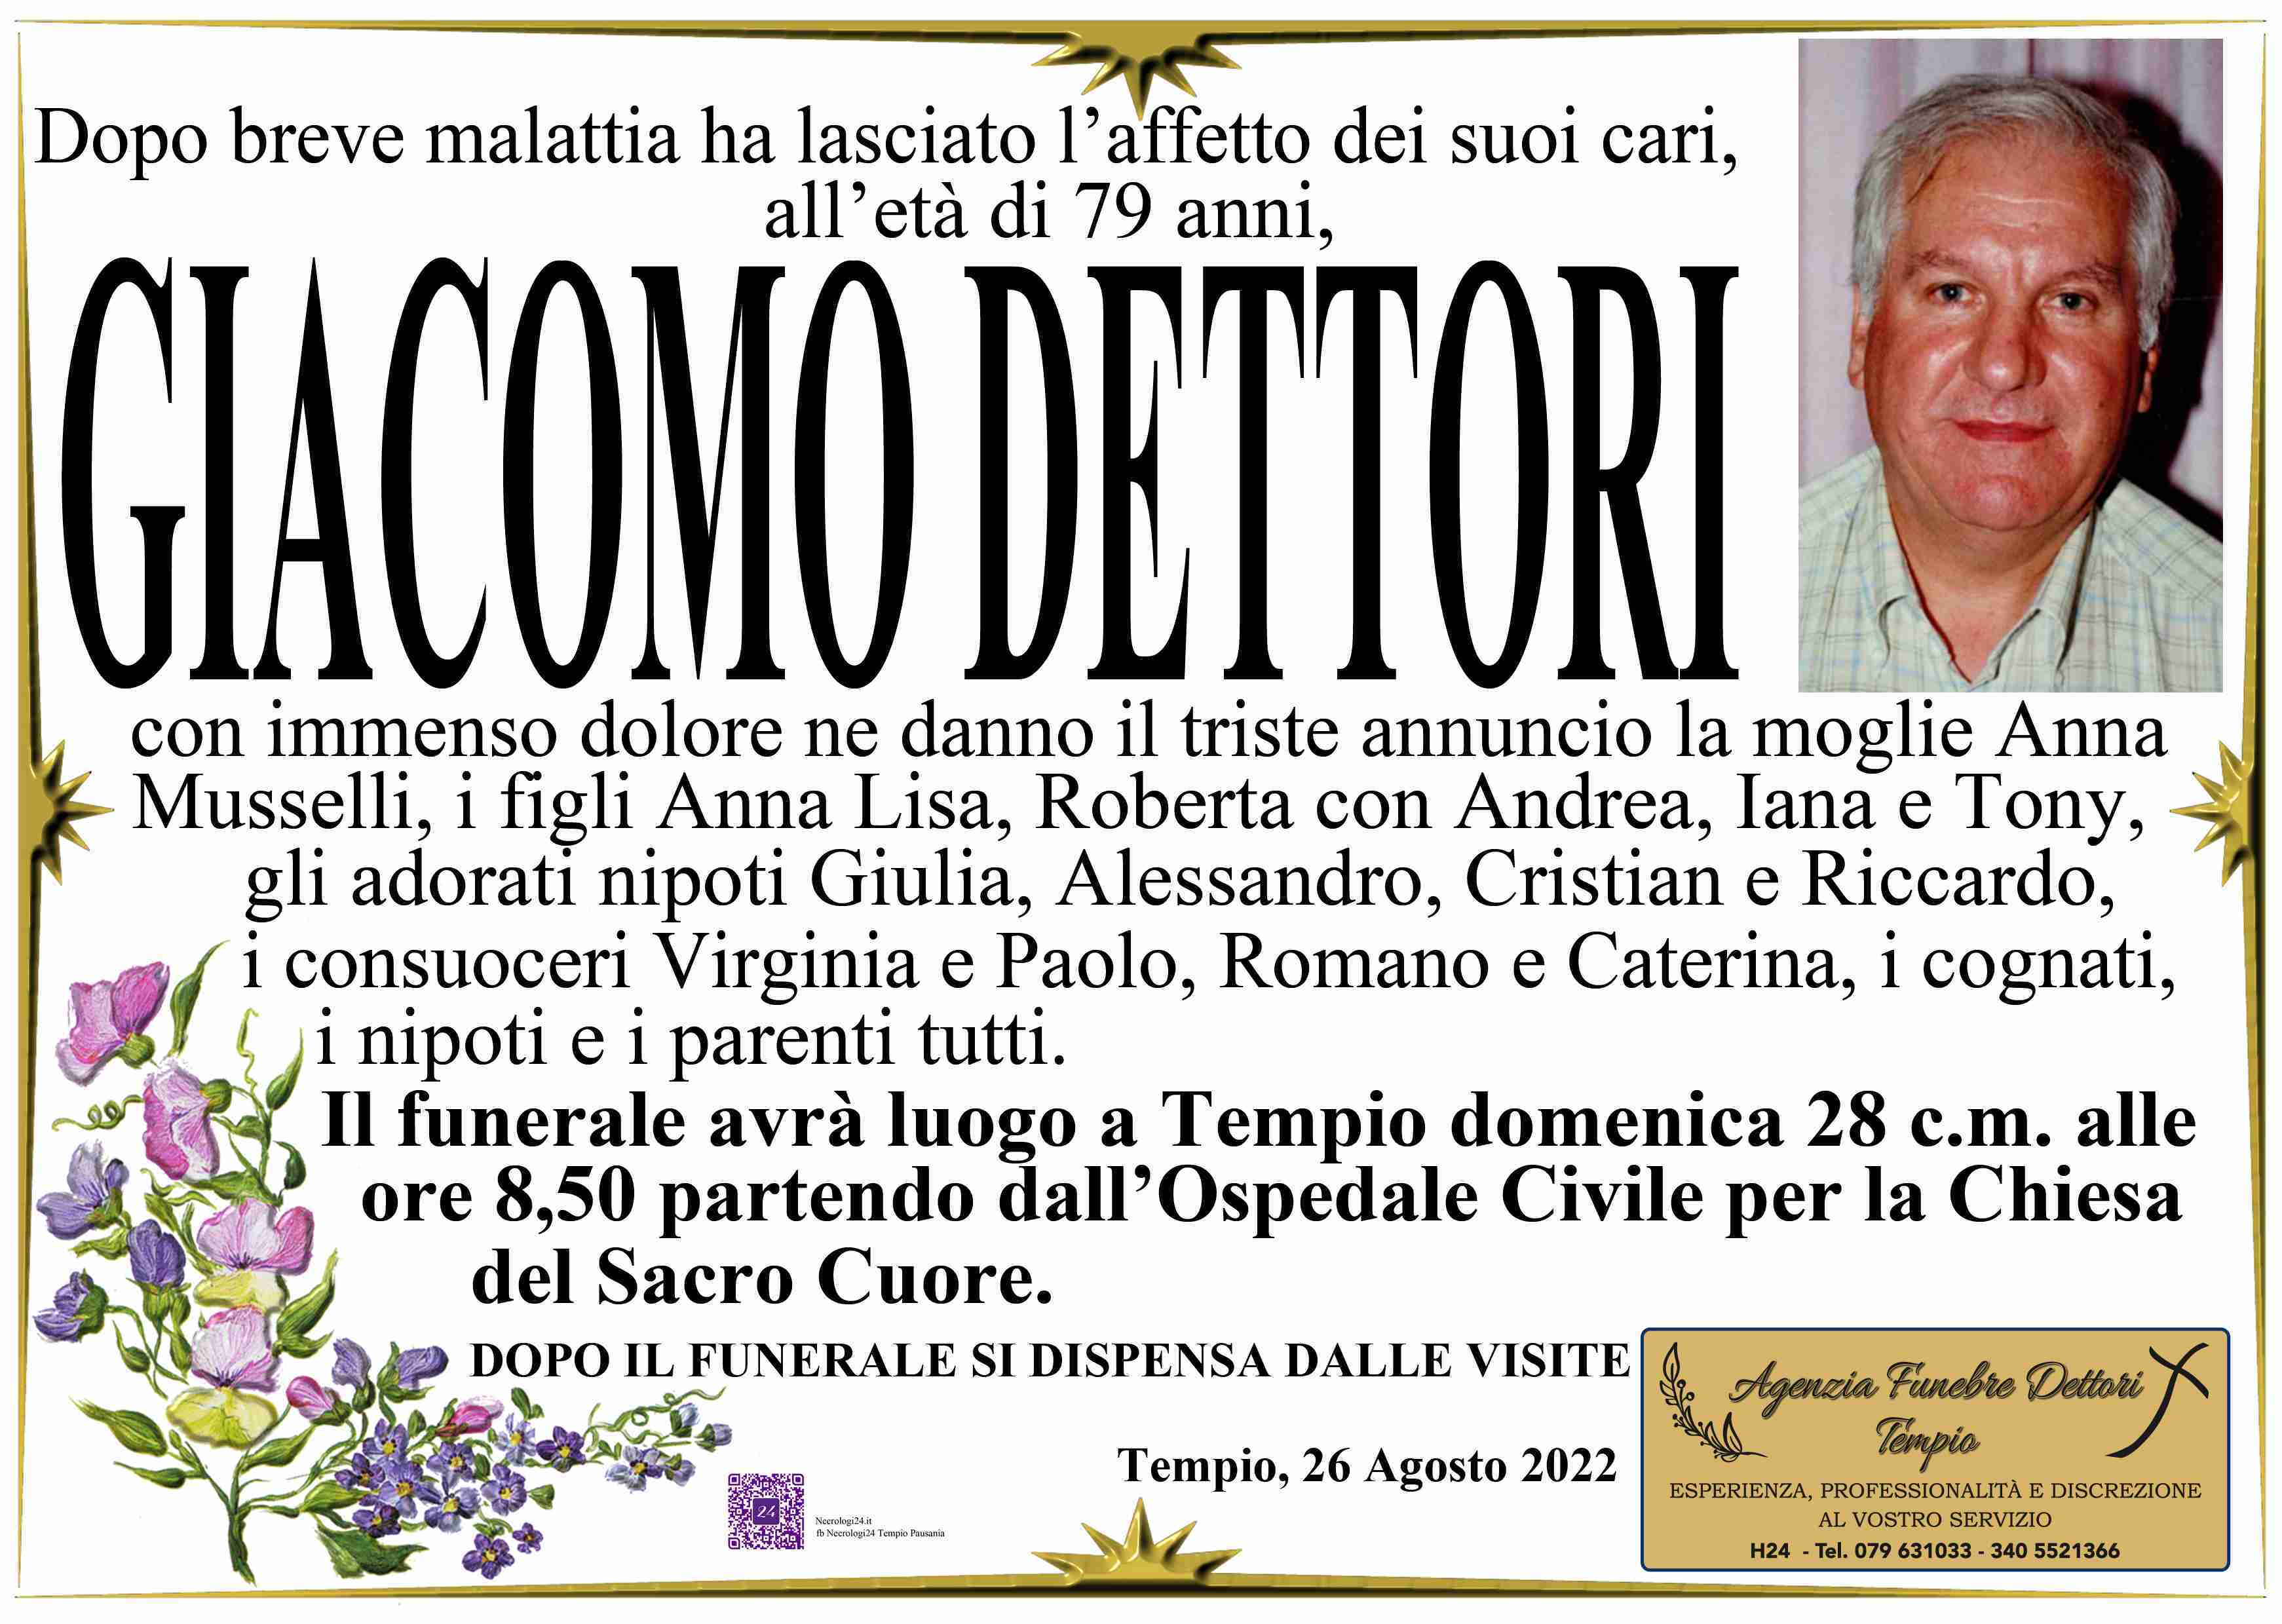 Giacomo Dettori